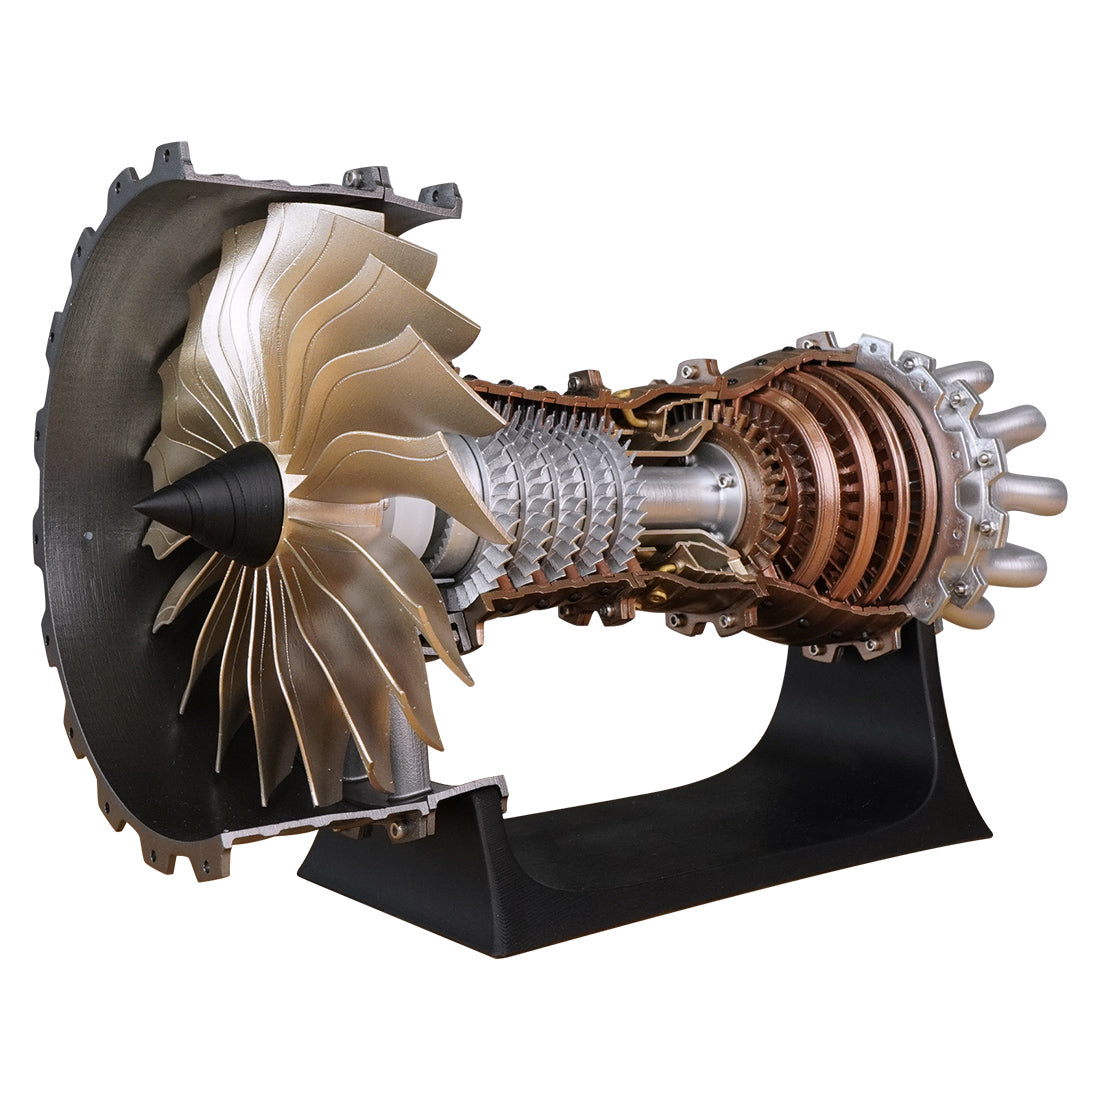 3D Printed Aircraft Engine Model